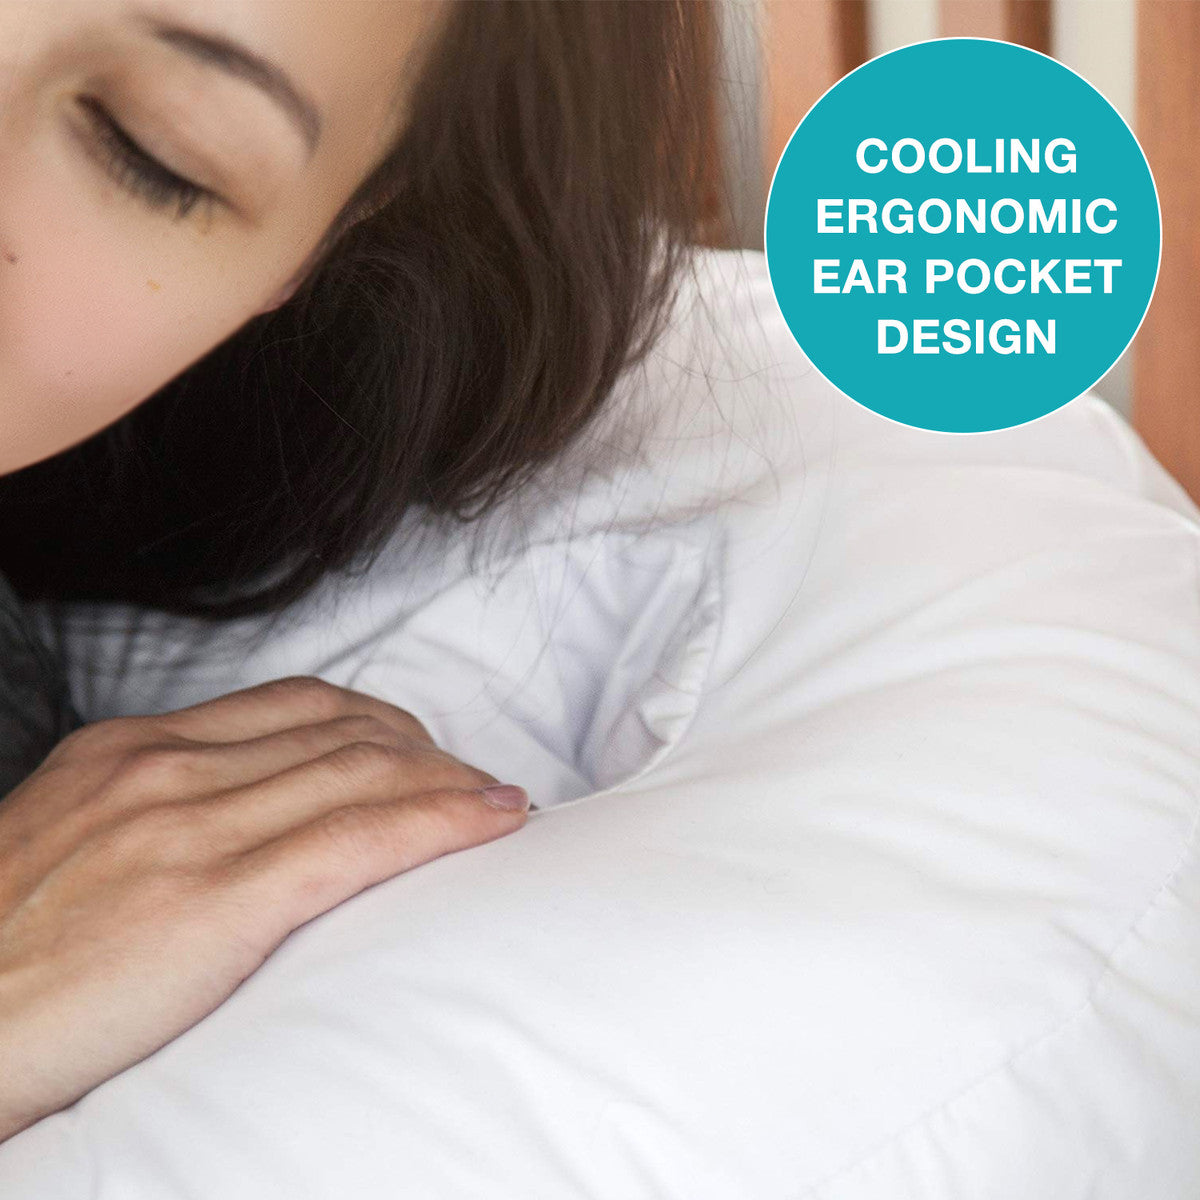 DMI Hypoallergenic Side Sleeper Pillow - Senior.com Body Pillows